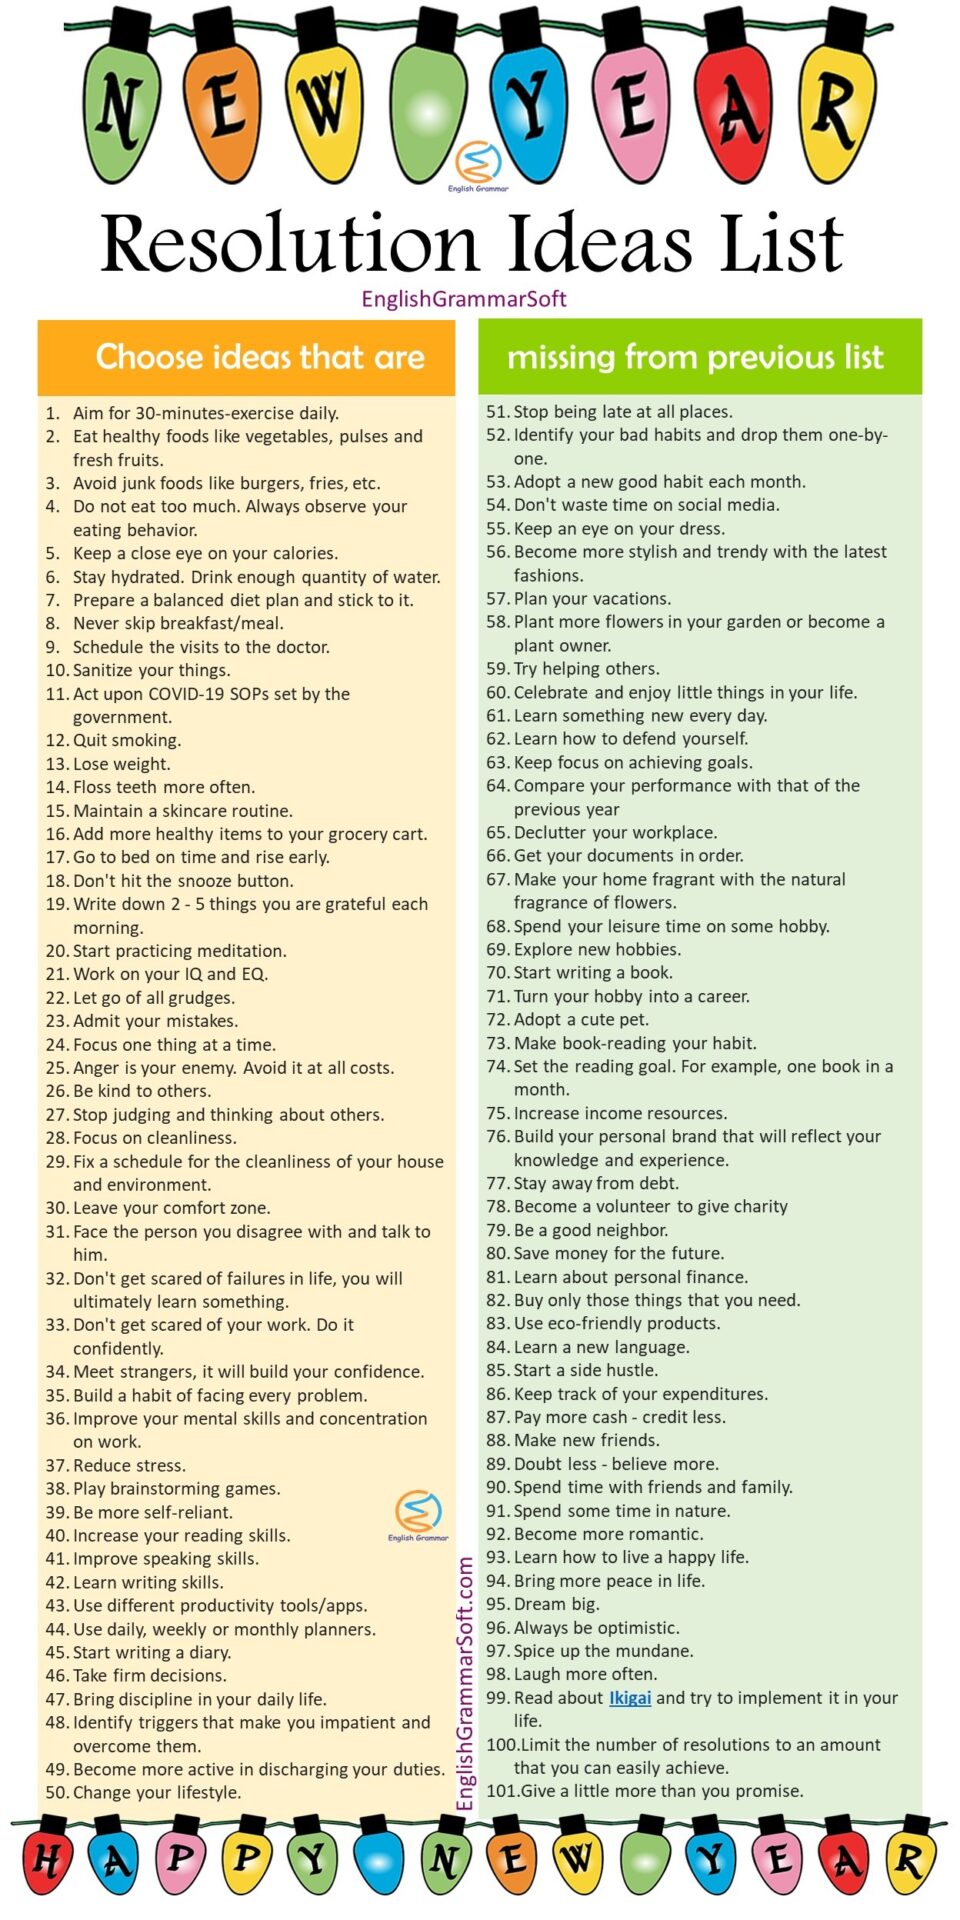 Ultimate List of 101 New Year Resolution Ideas 2021 English Grammar